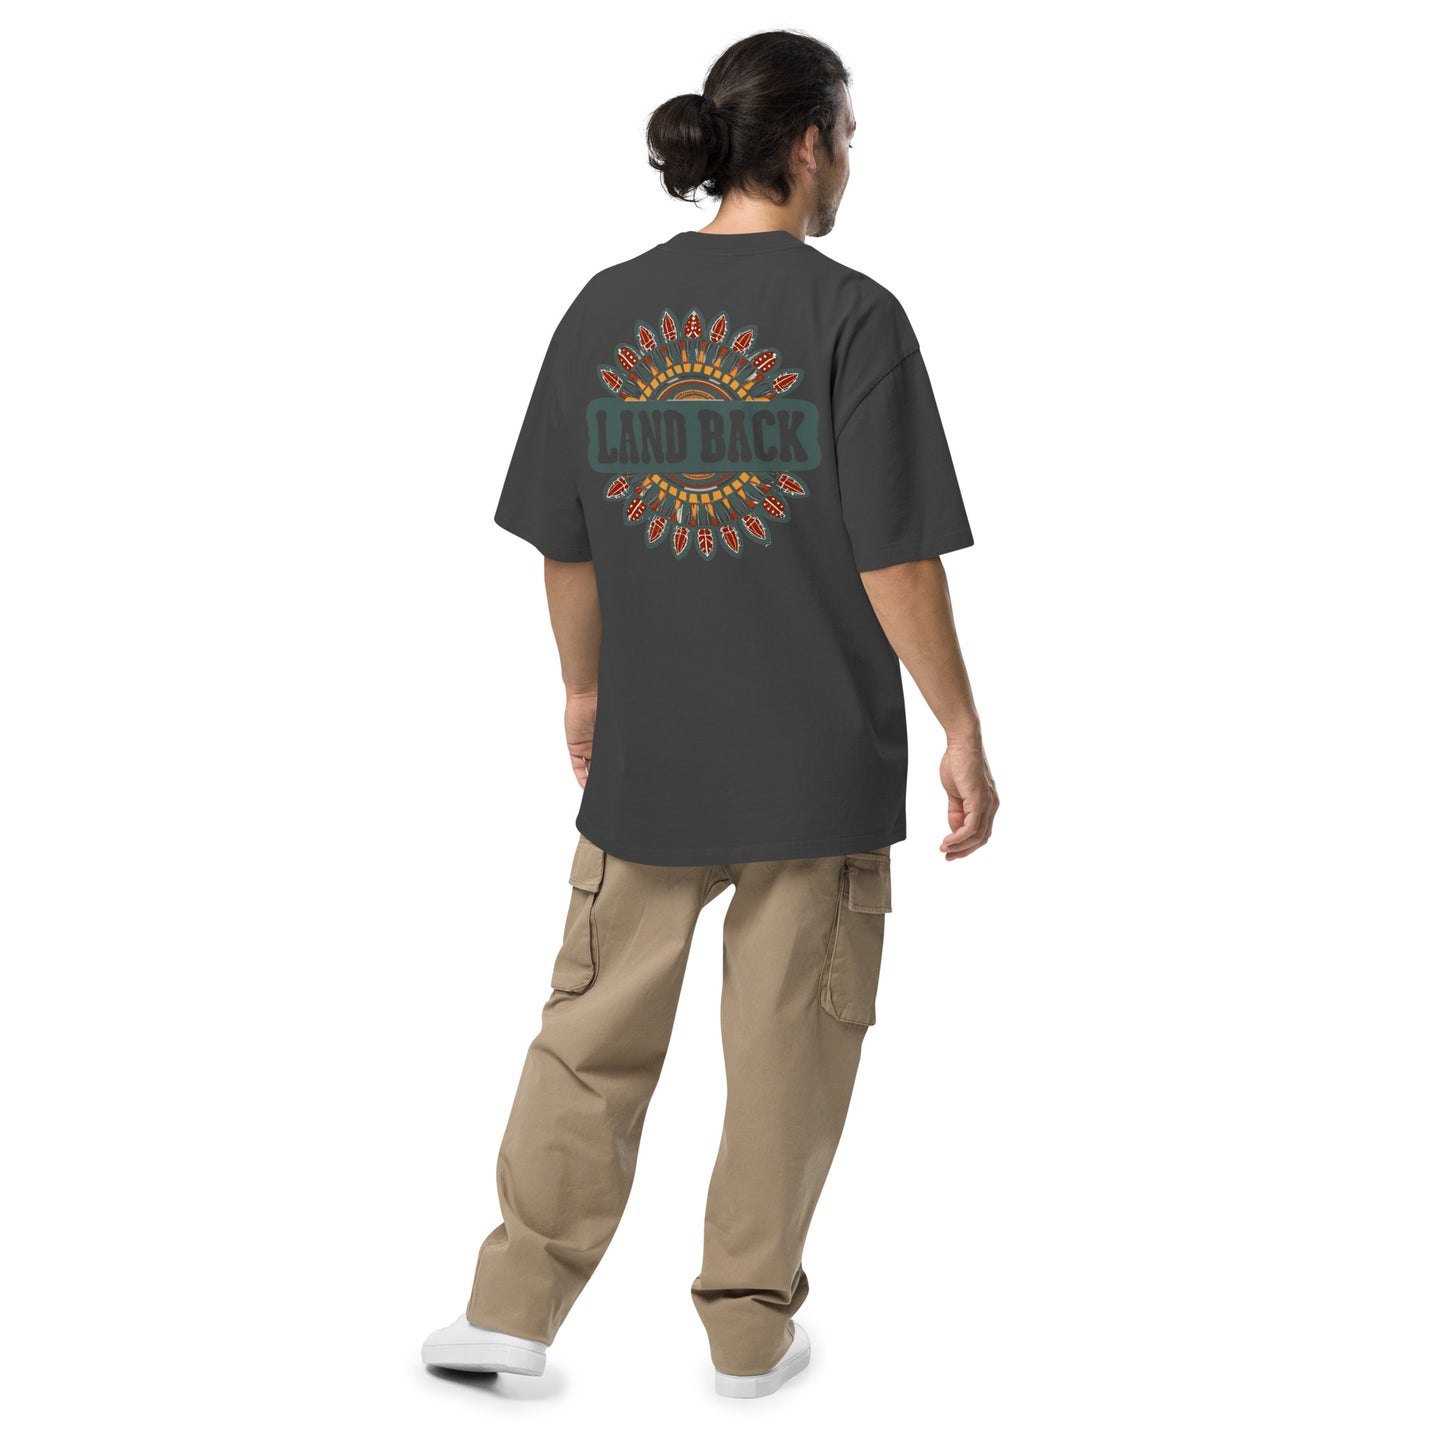 Land back-Arrowheads- Oversized faded t-shirt